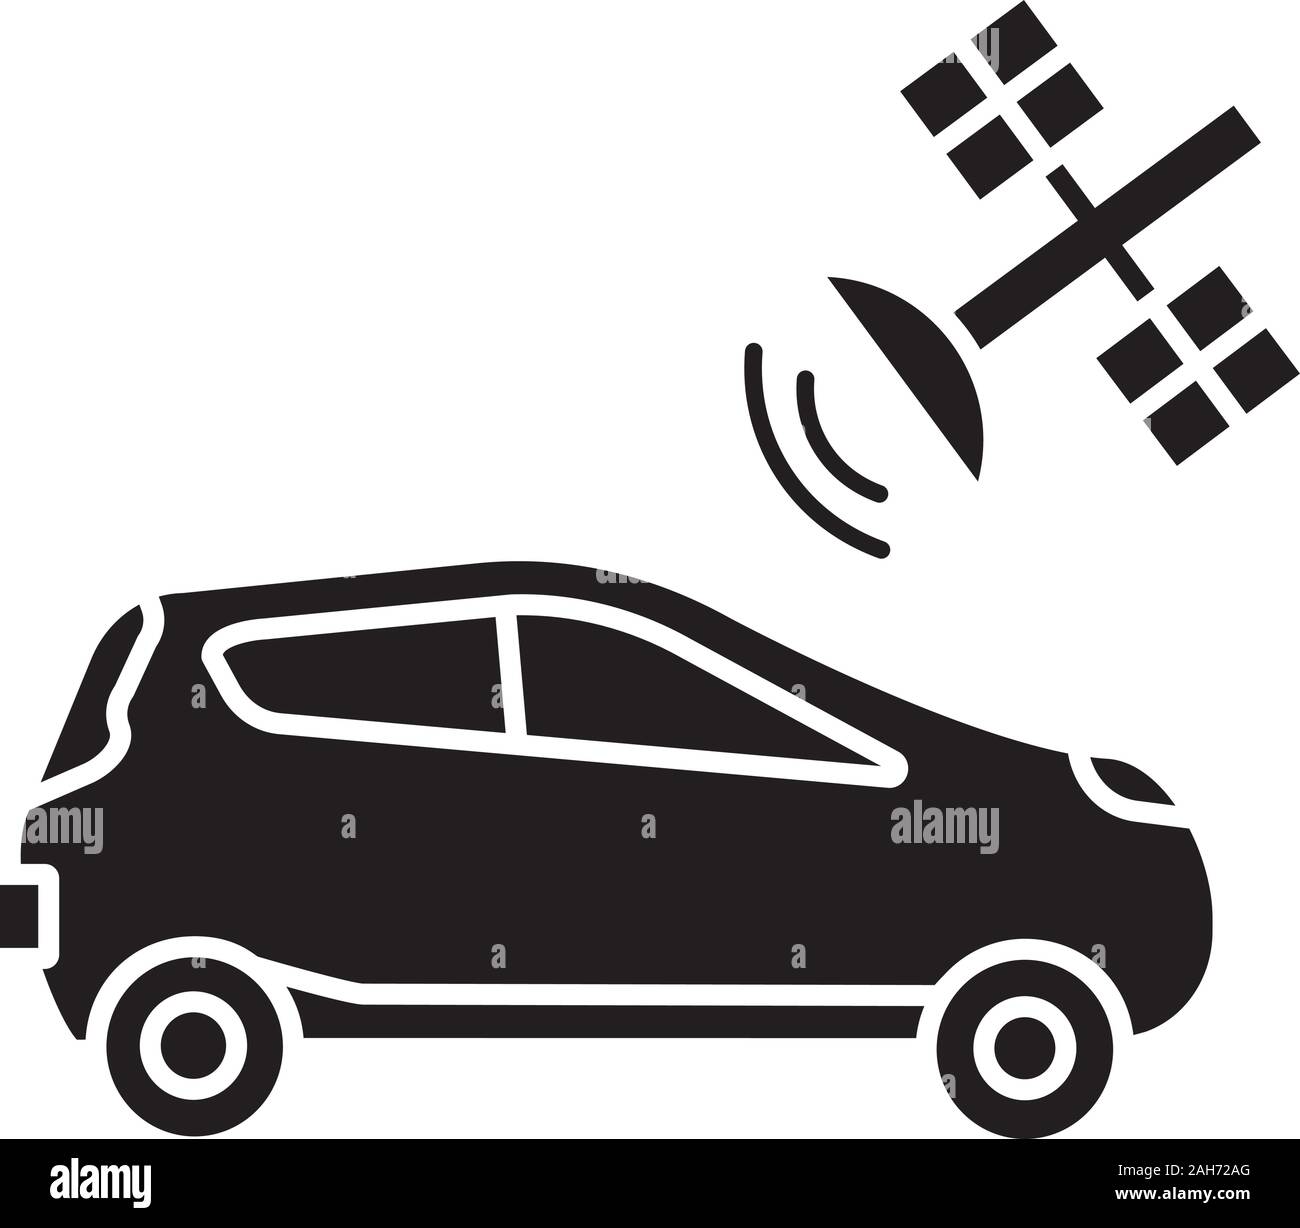 Autonome Auto mit Bediensatelliten glyph Icon. Smart Auto mit GNSS. Selbst Fahrer Automobil mit Global Navigation Satellite System. Fahrerlose veh Stock Vektor